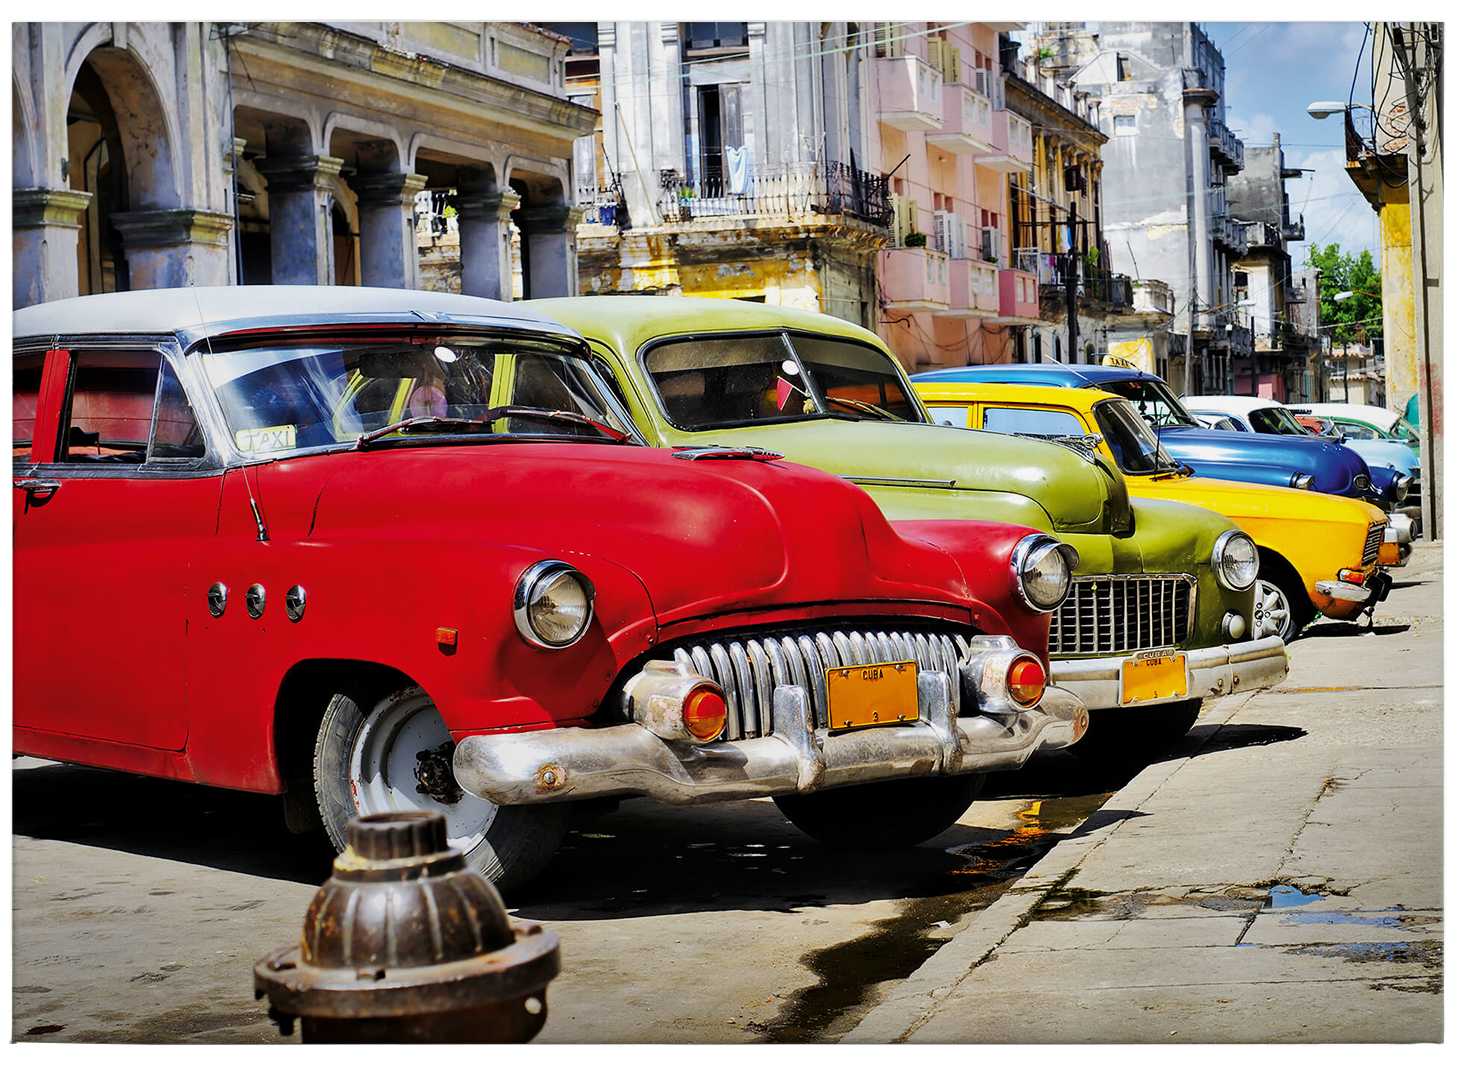             Cuba Cuadro en lienzo Coche Vintage en La Habana - 0,70 m x 0,50 m
        